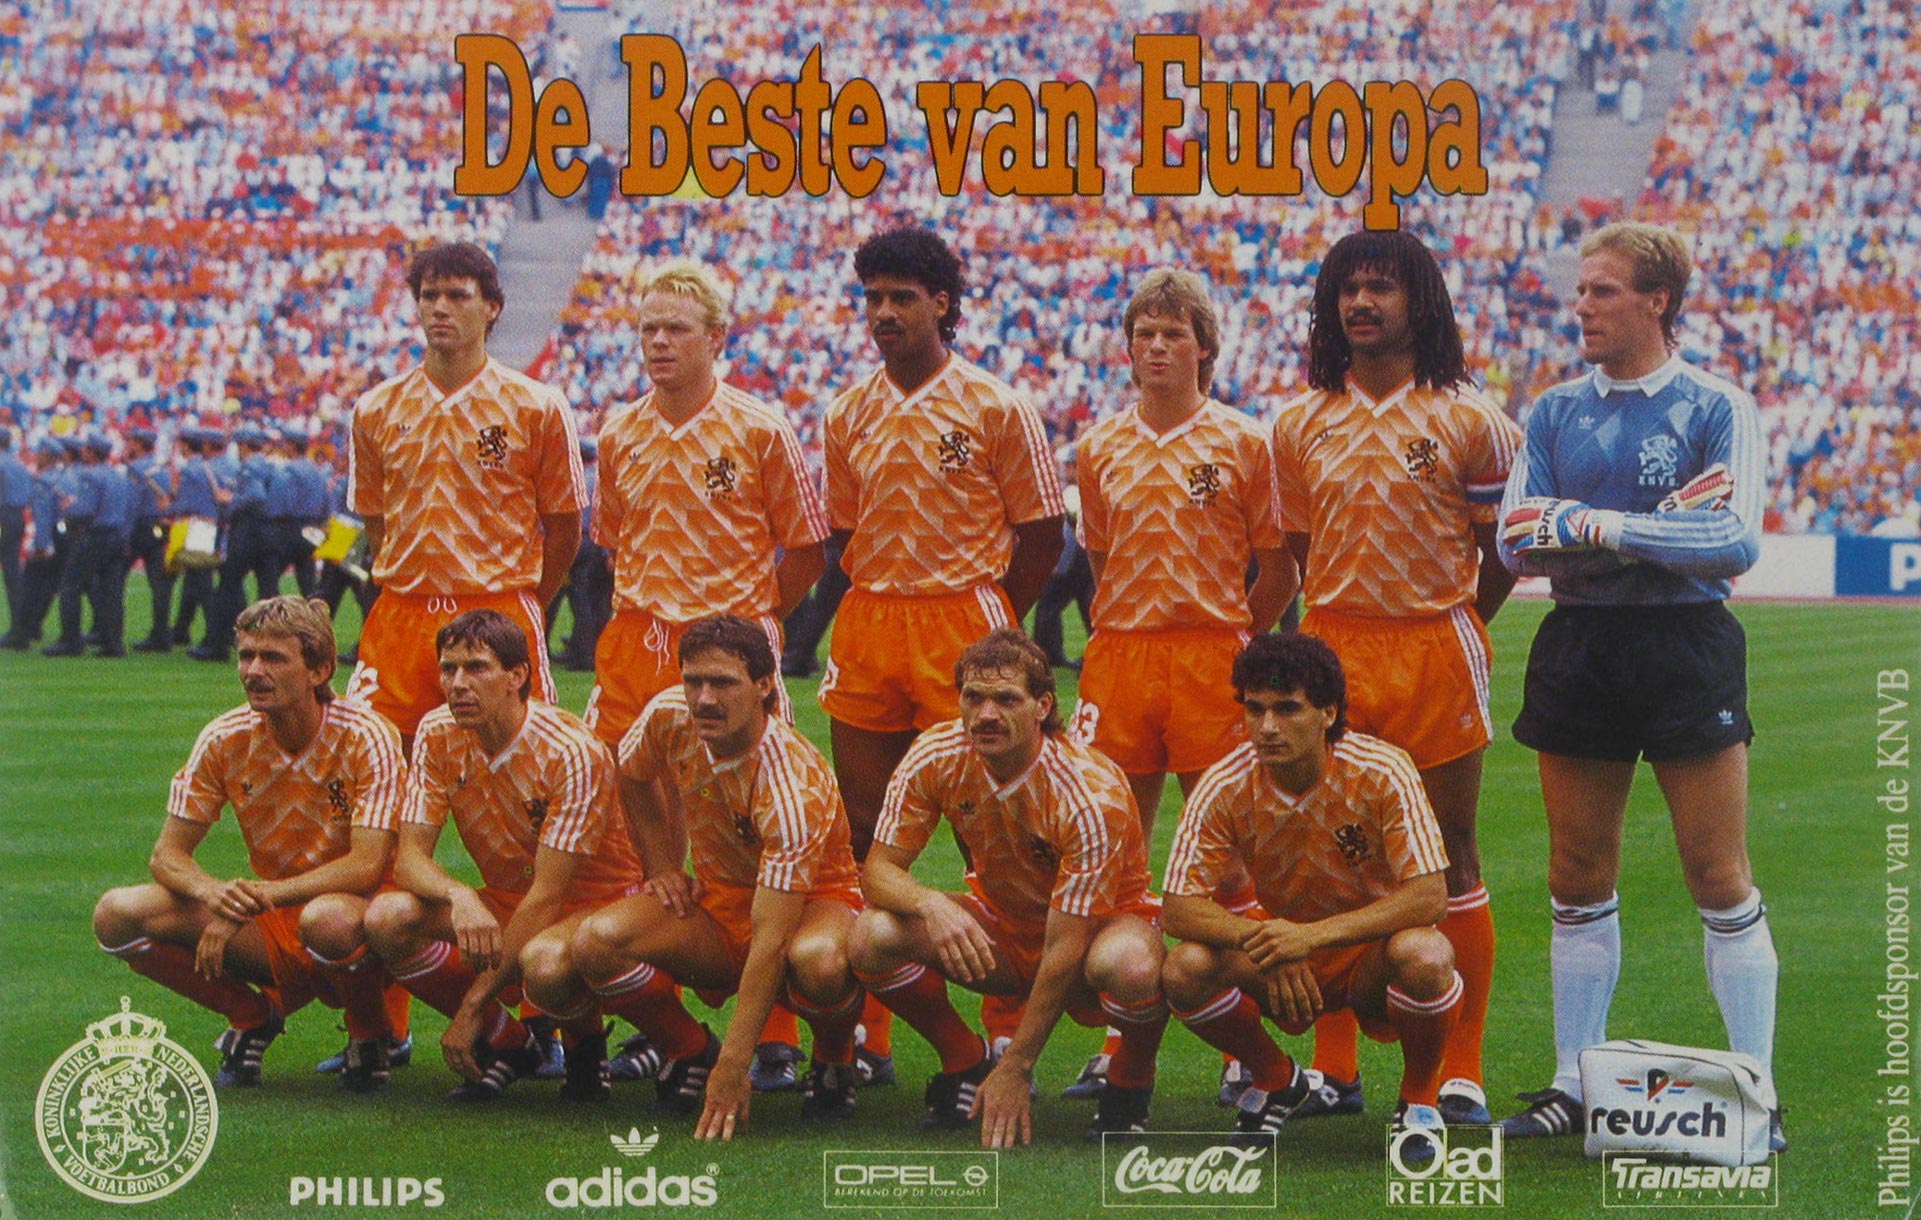   Mannschaftskarte De Beste van Europa. Fußballnationalmannschaft Niederlande 1988. 